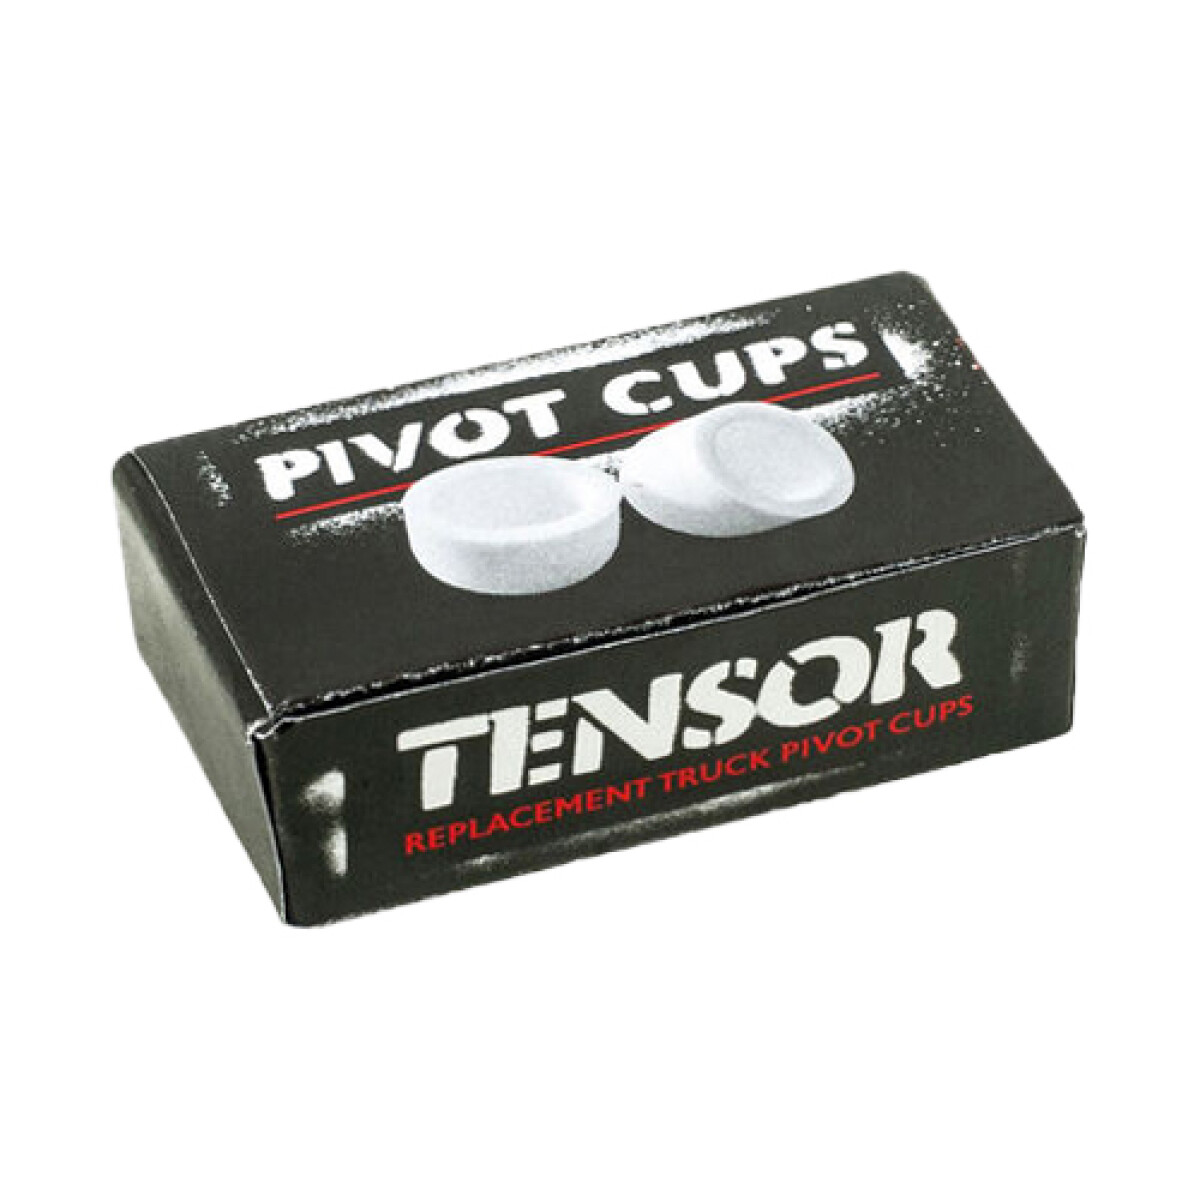 Pivot Cups Tensor Atg 